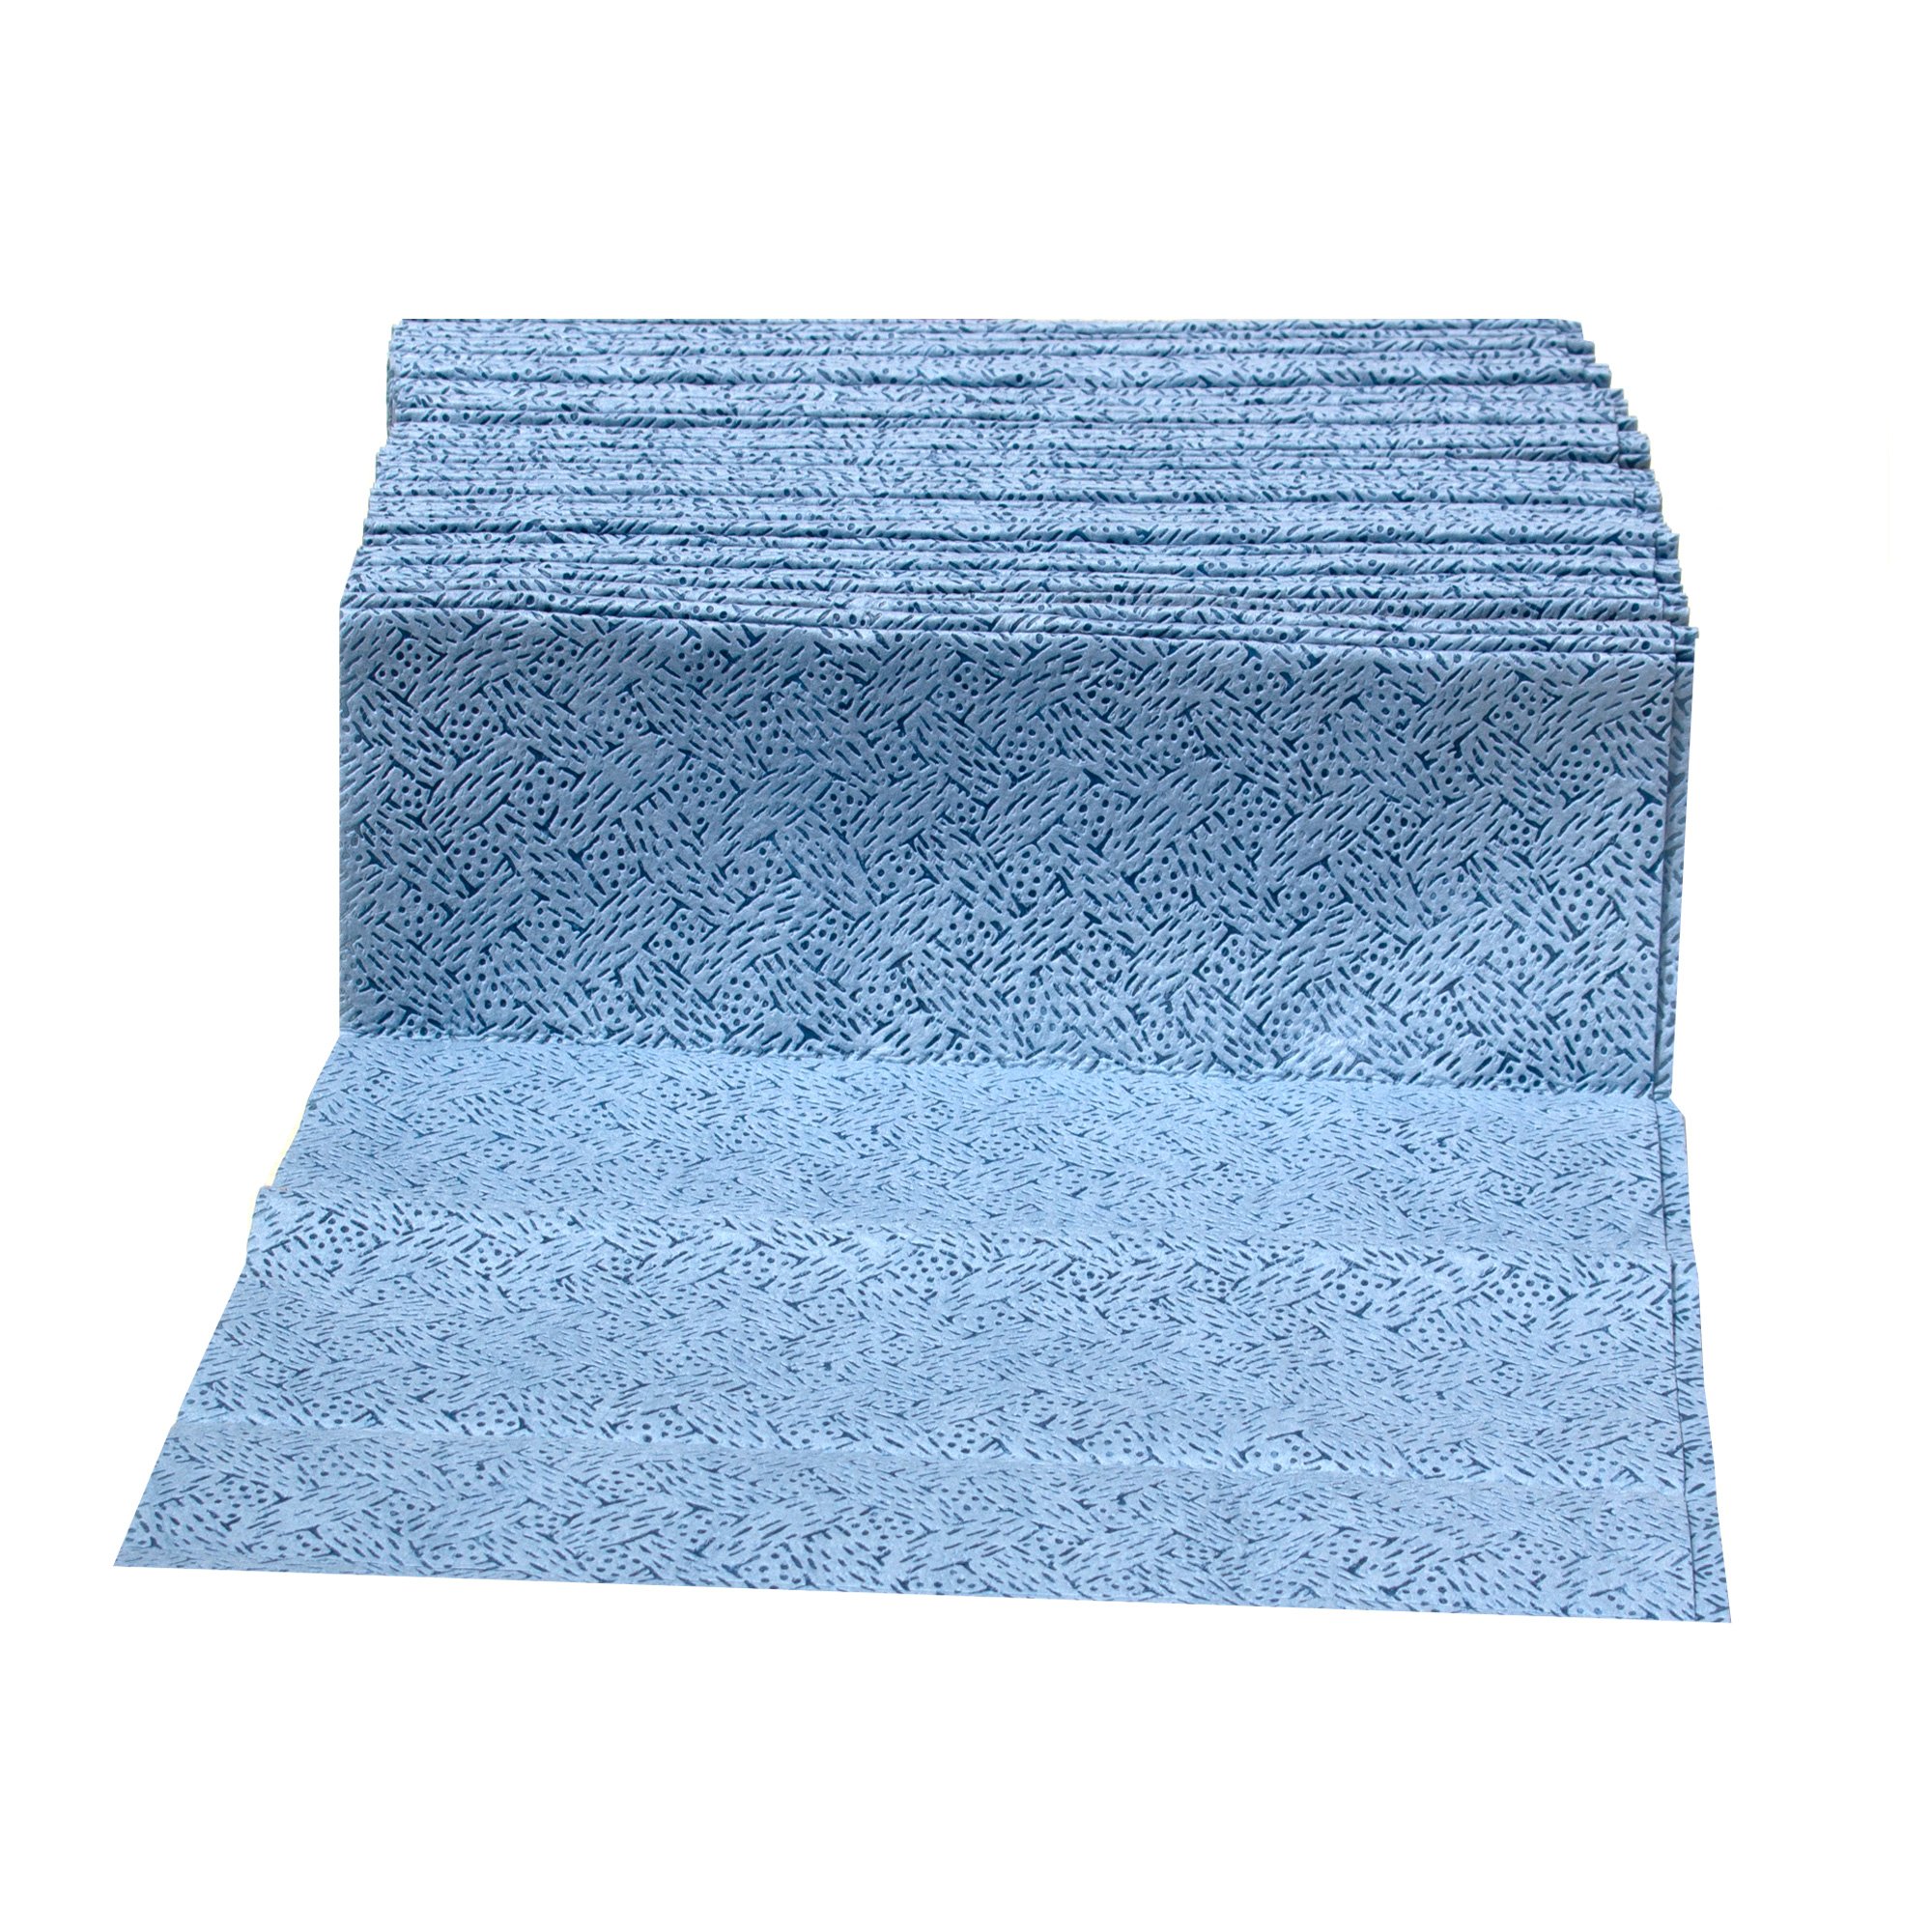 Kimtech Prep 7644 Prozeßwischtücher blau in der BRAG Box, 30,5 x 42,5 cm, 160 Tücher